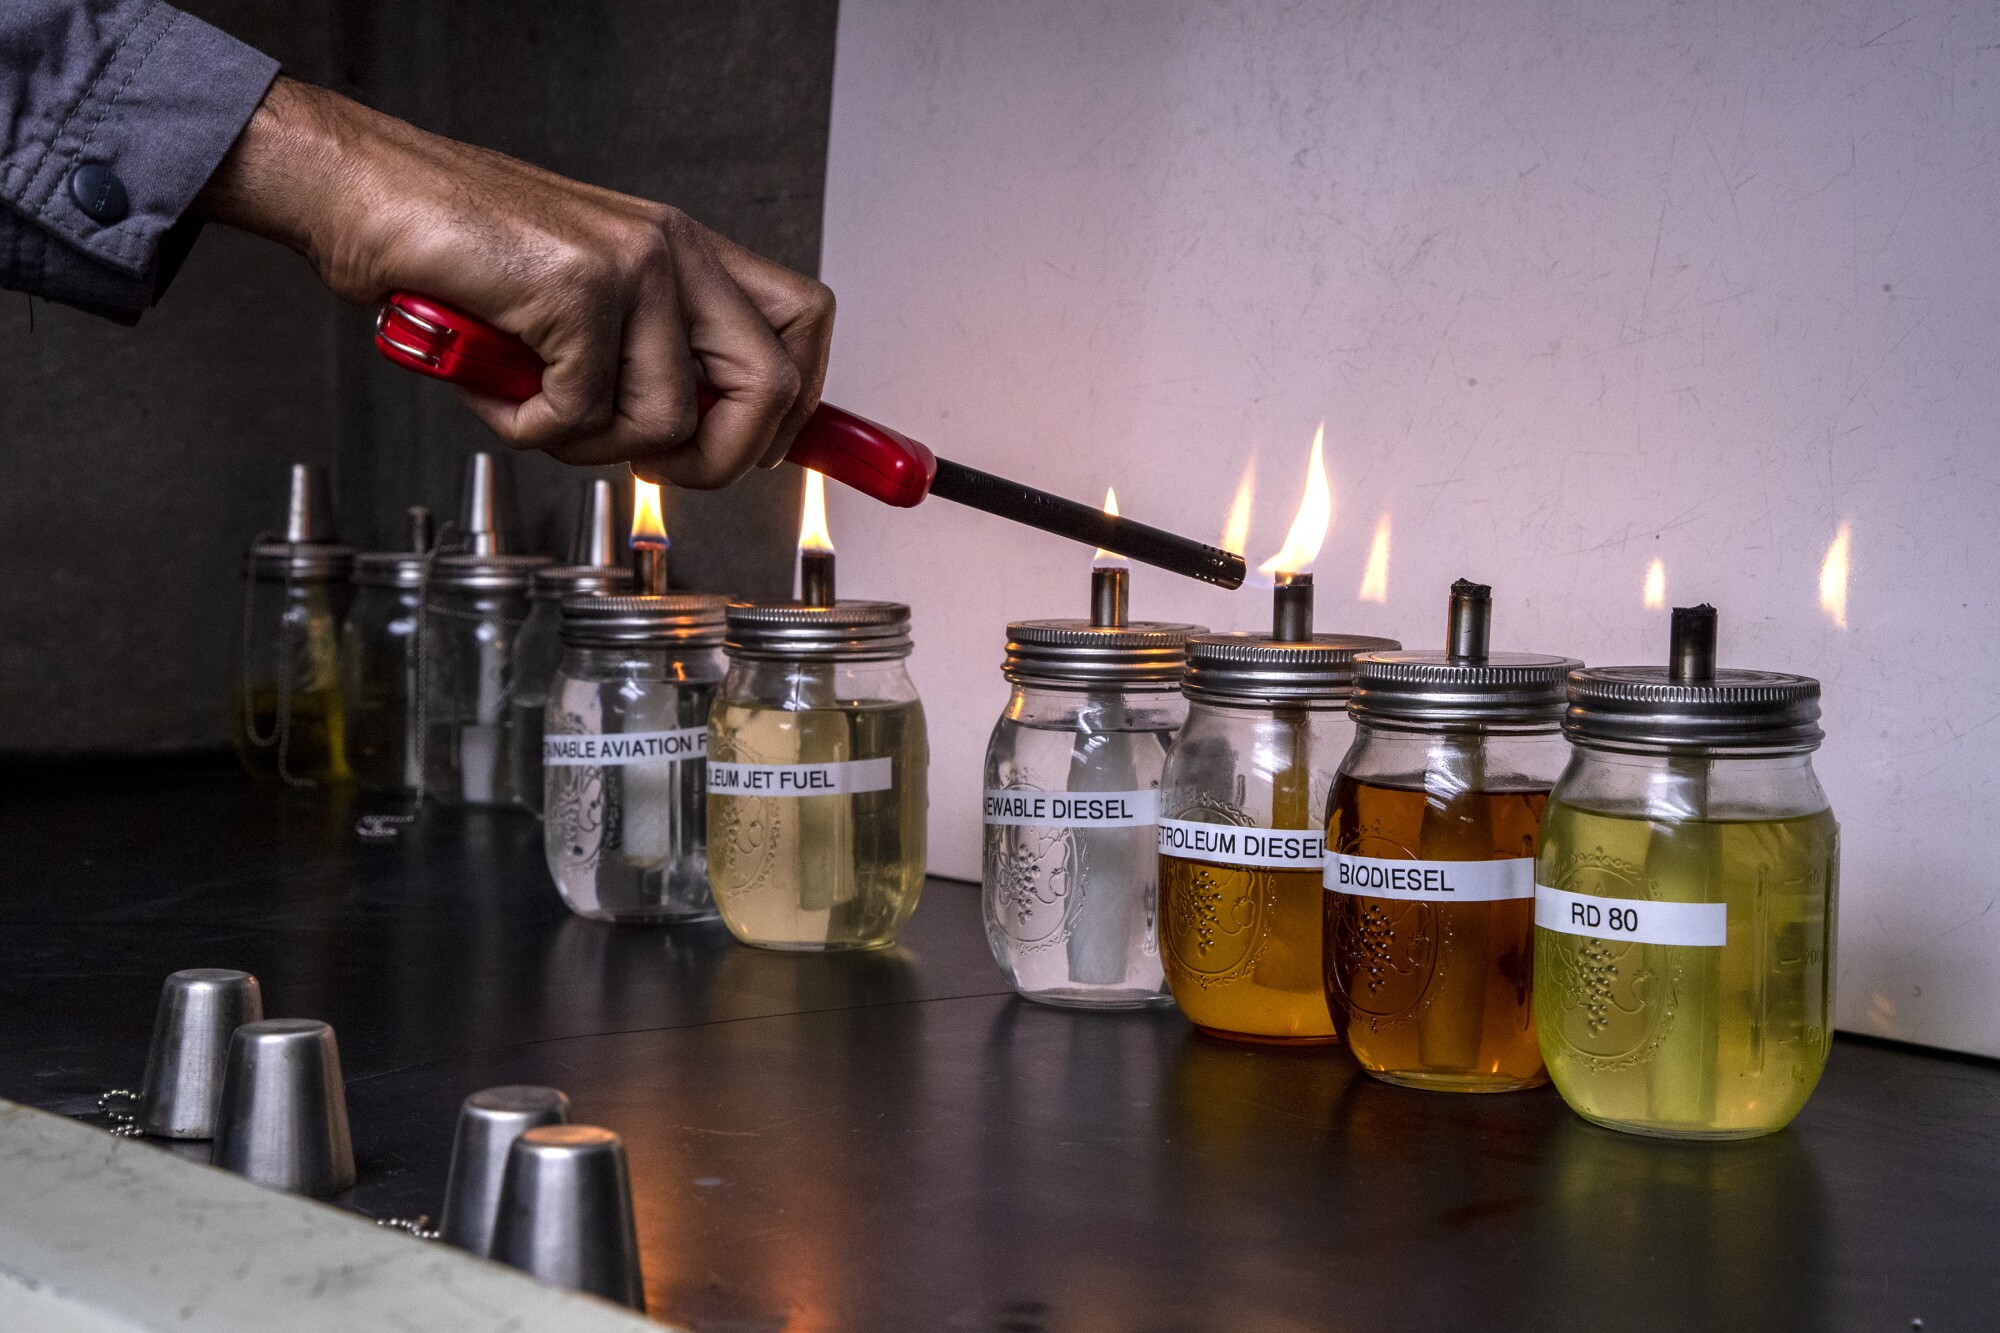 A man lights wicks atop a row of jars filled with various liquids